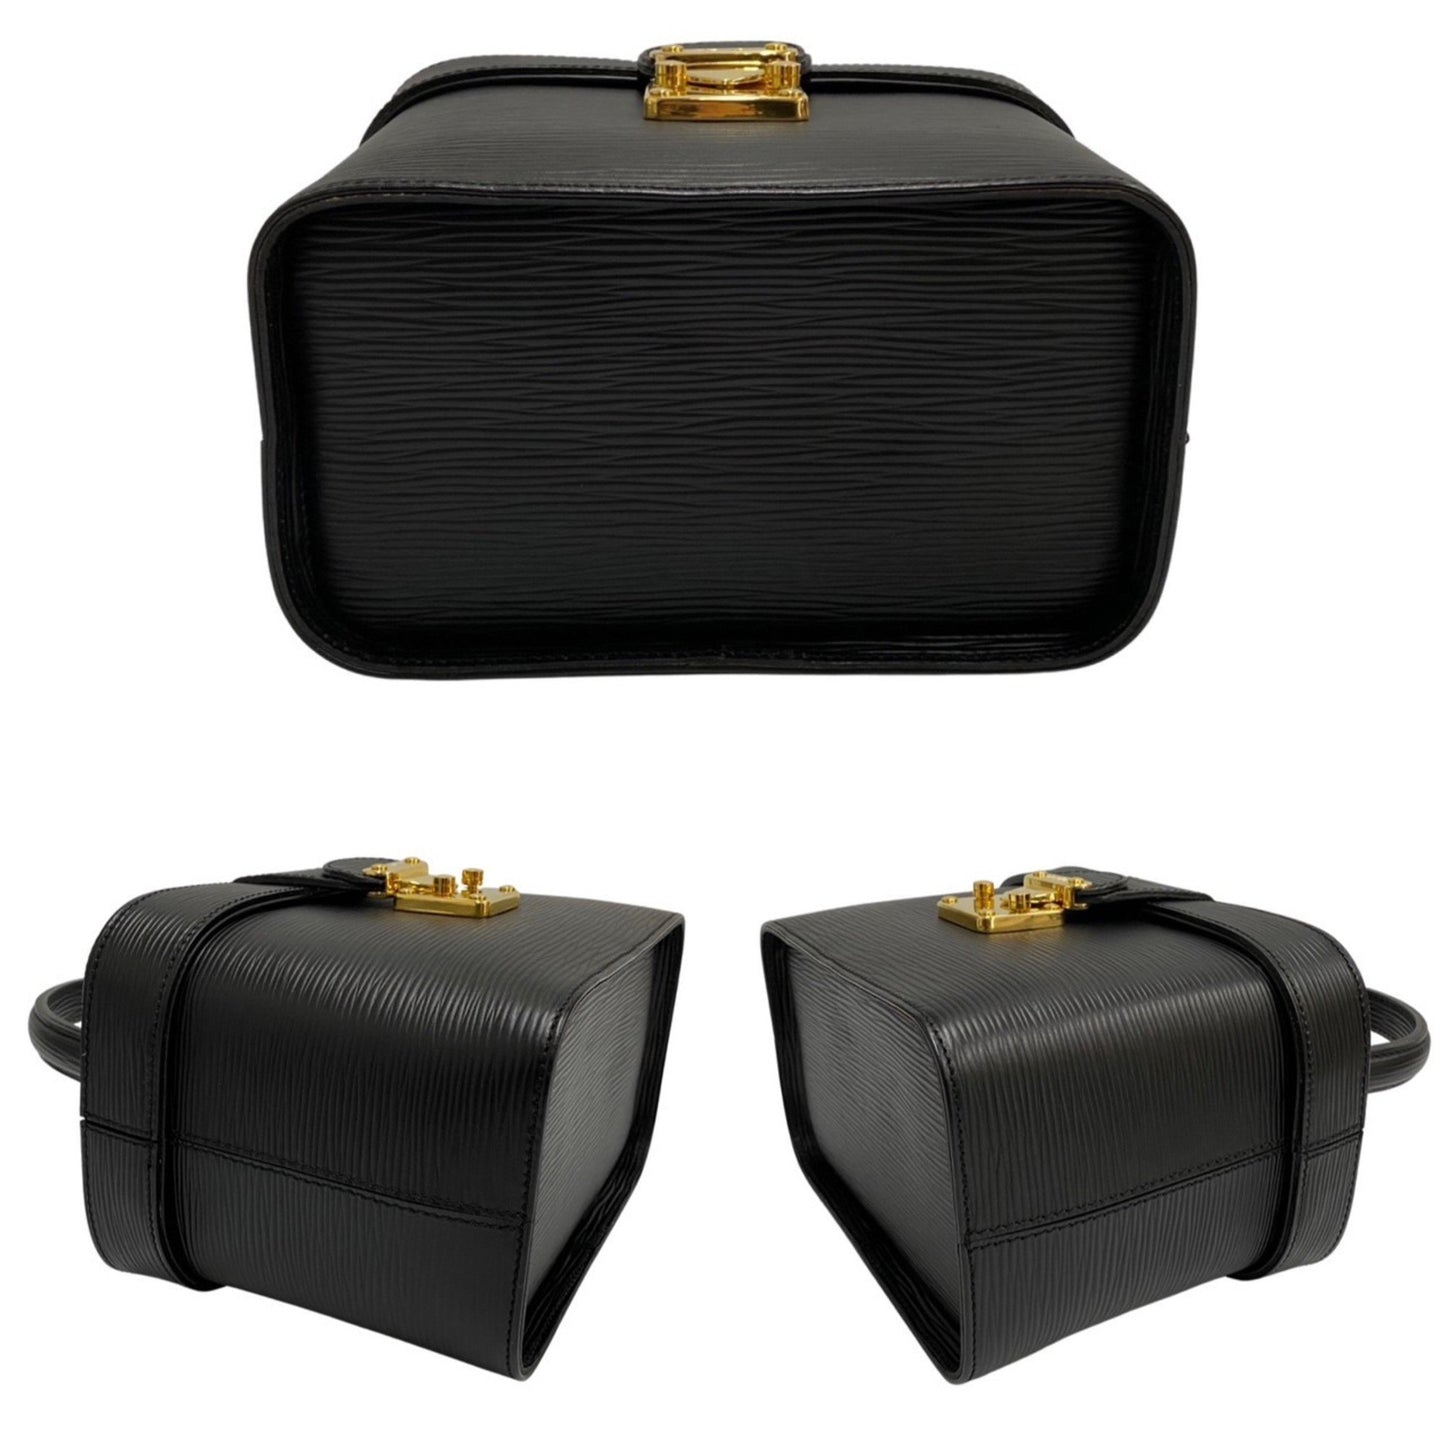 Fendi Women's Leather Vanity Box Bag in Black